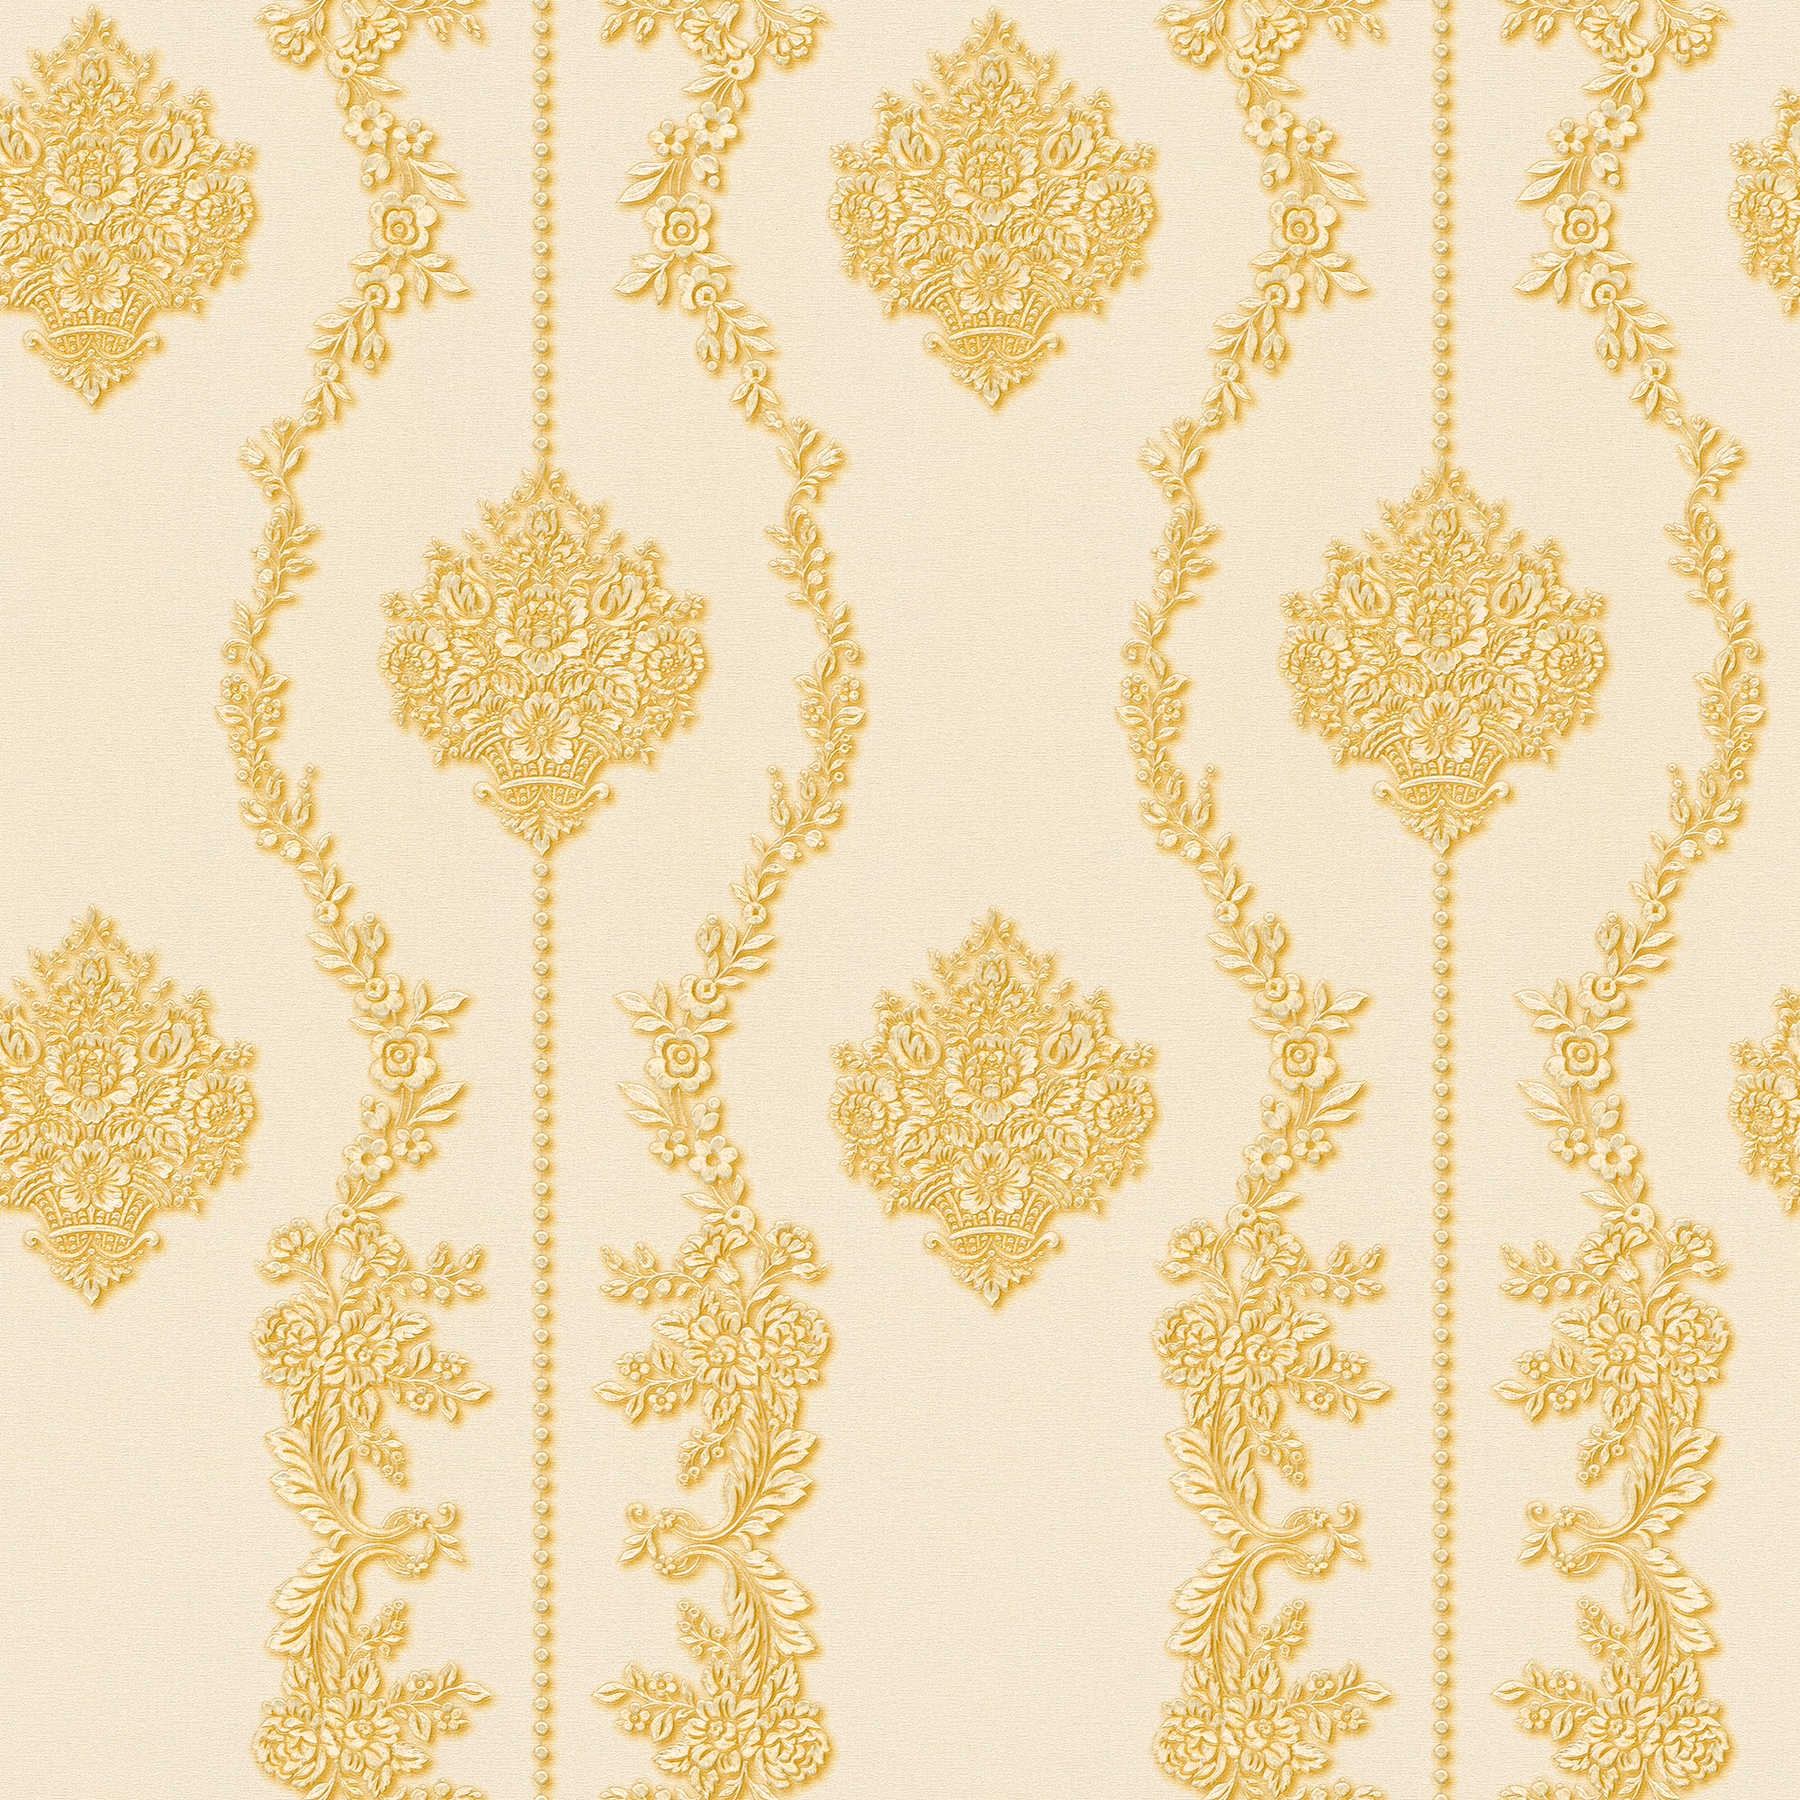 Ornamental wallpaper floral pattern & vines - cream, gold
